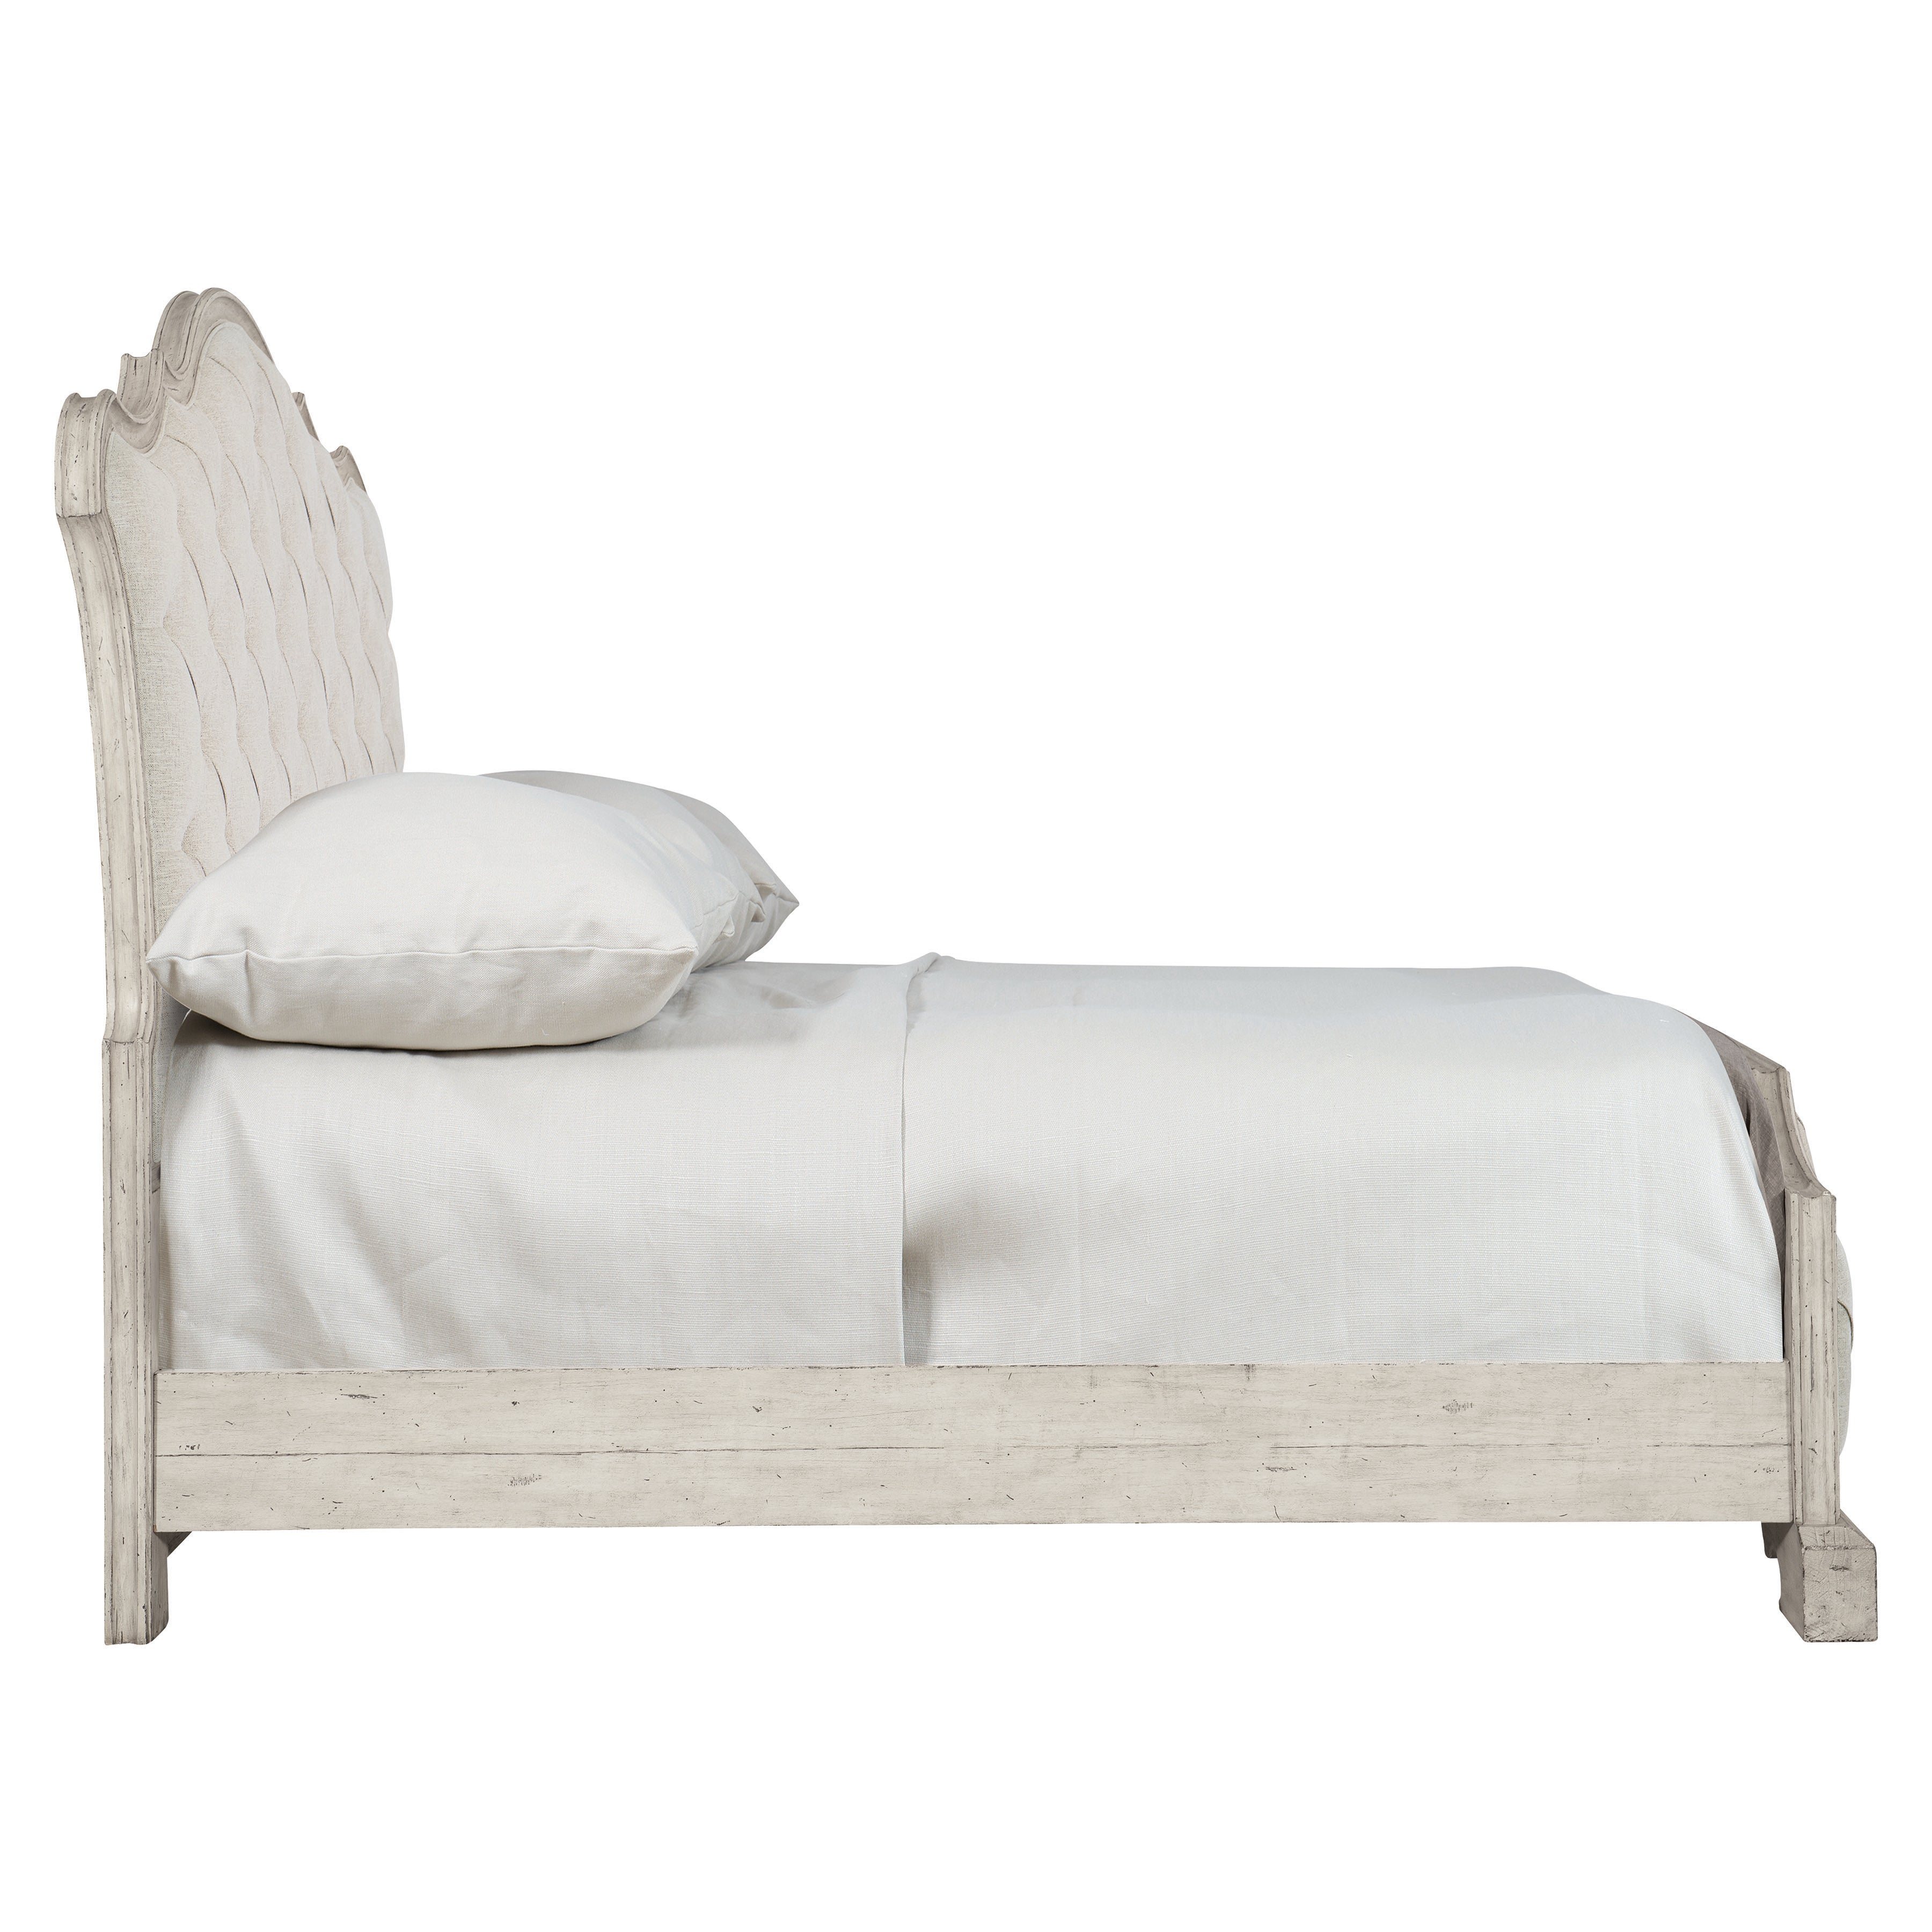 Mirabelle Upholstered Queen Panel Bed